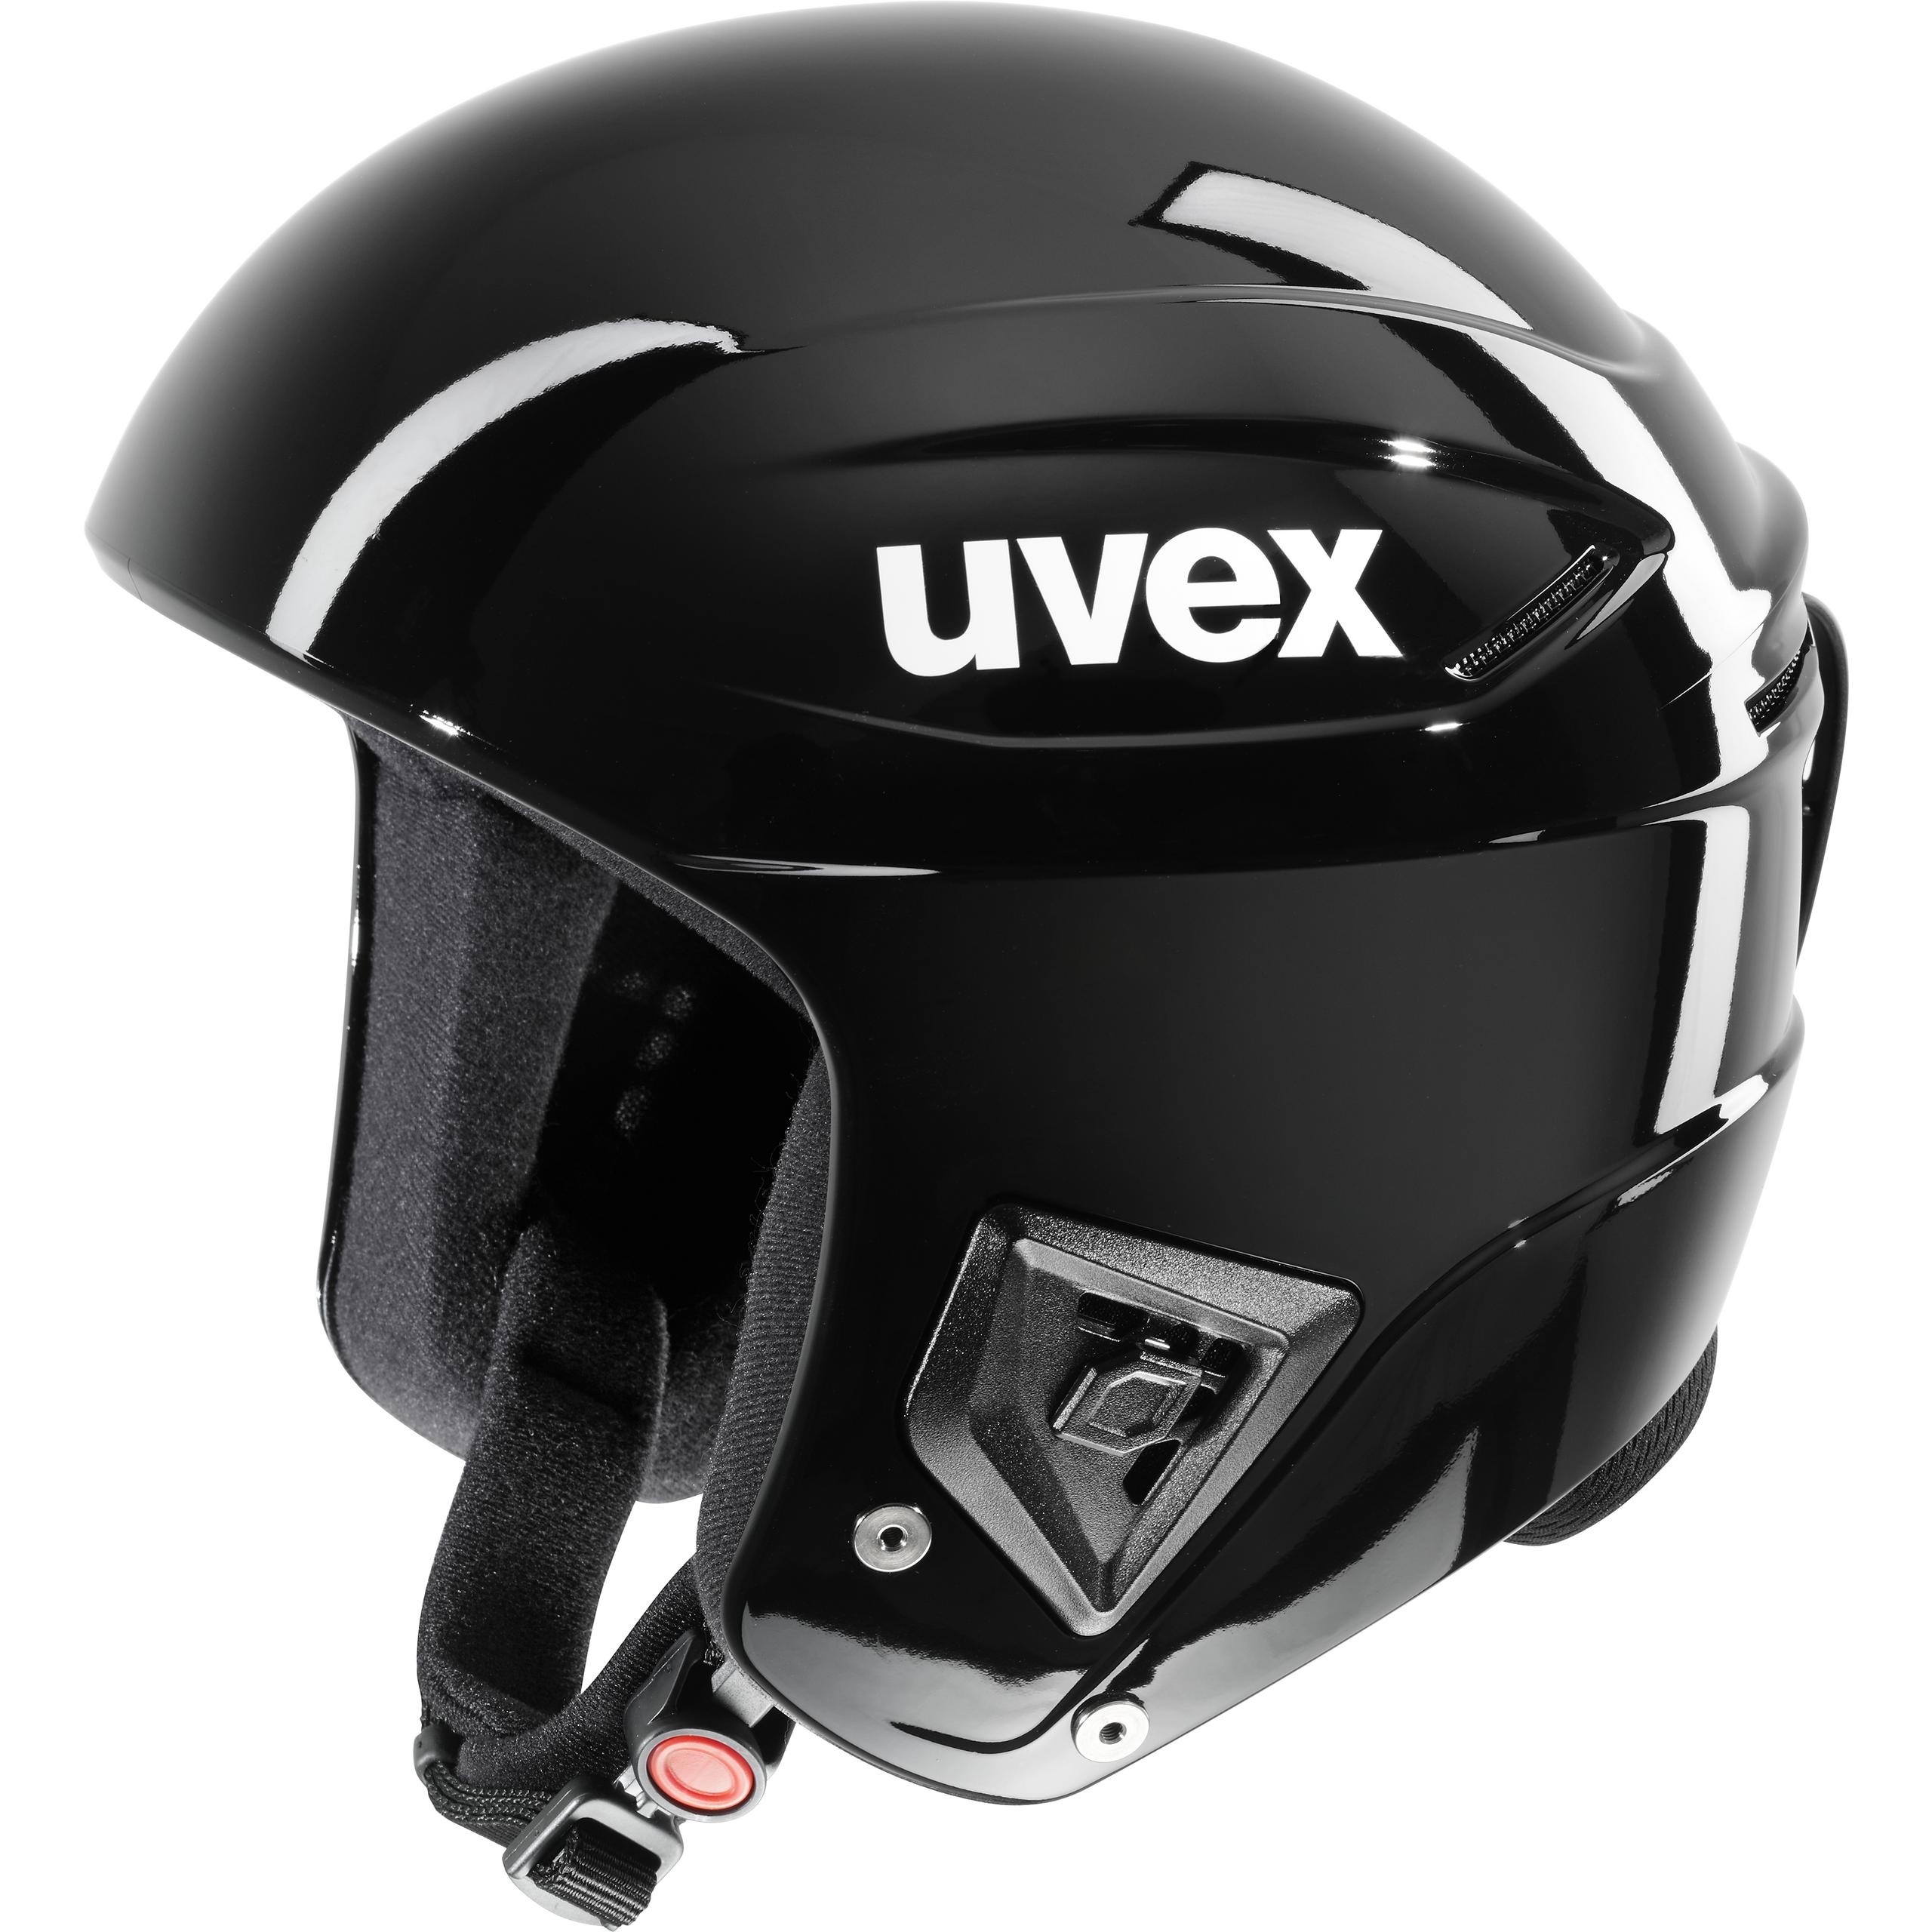 Interpretatief identificatie Ontslag Uvex race + FIS ski helmet all black